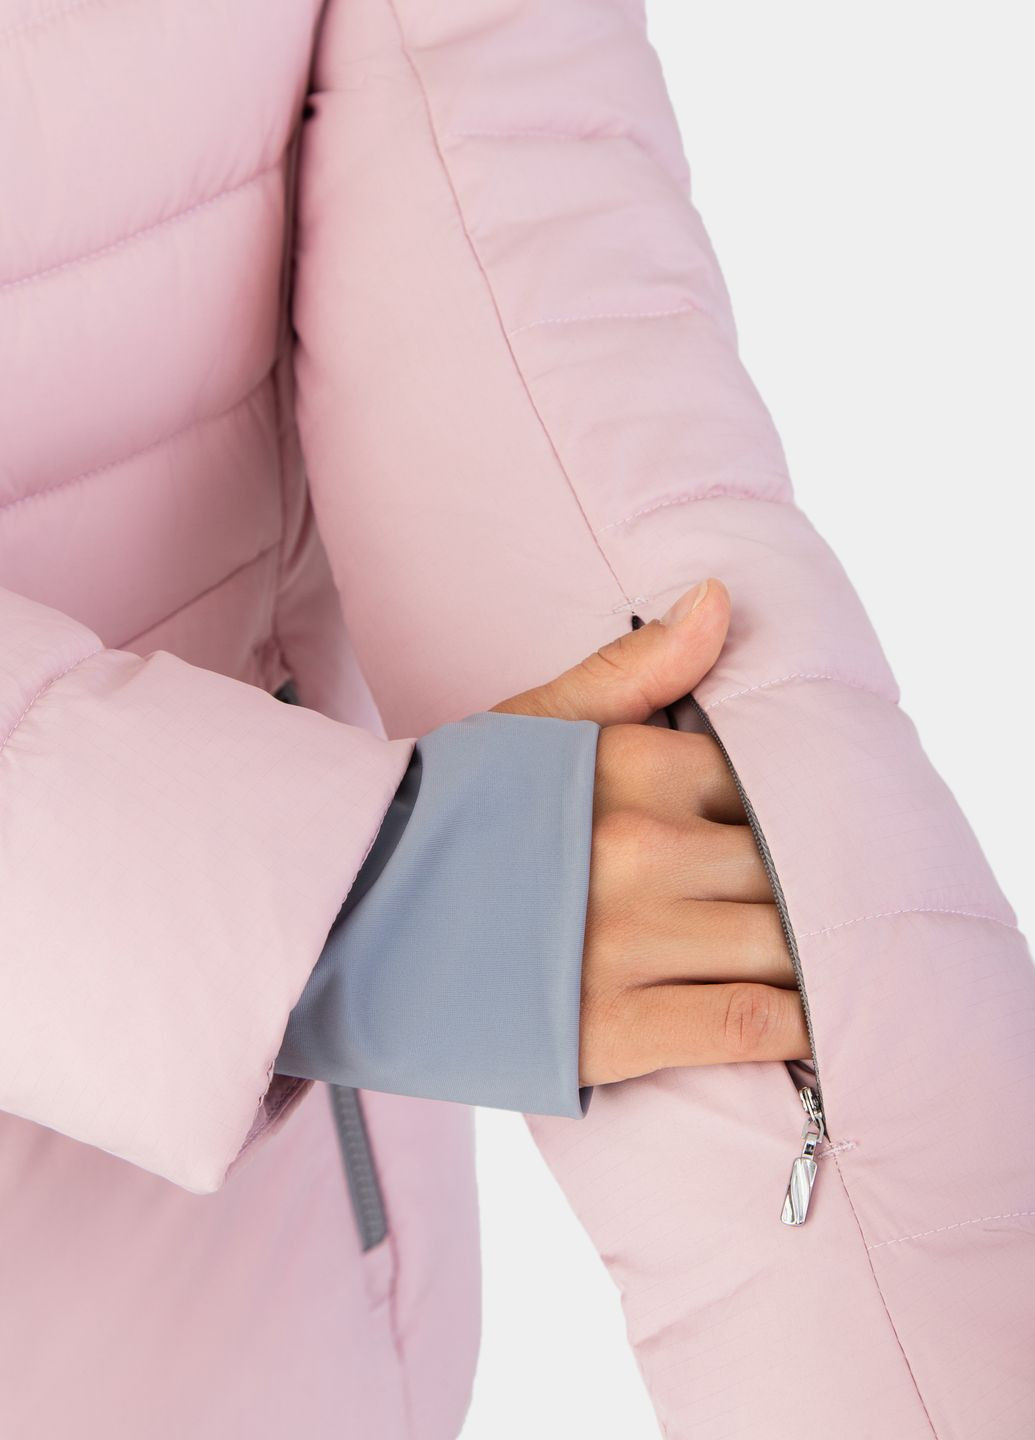 Рожева куртка жіноча Avecs